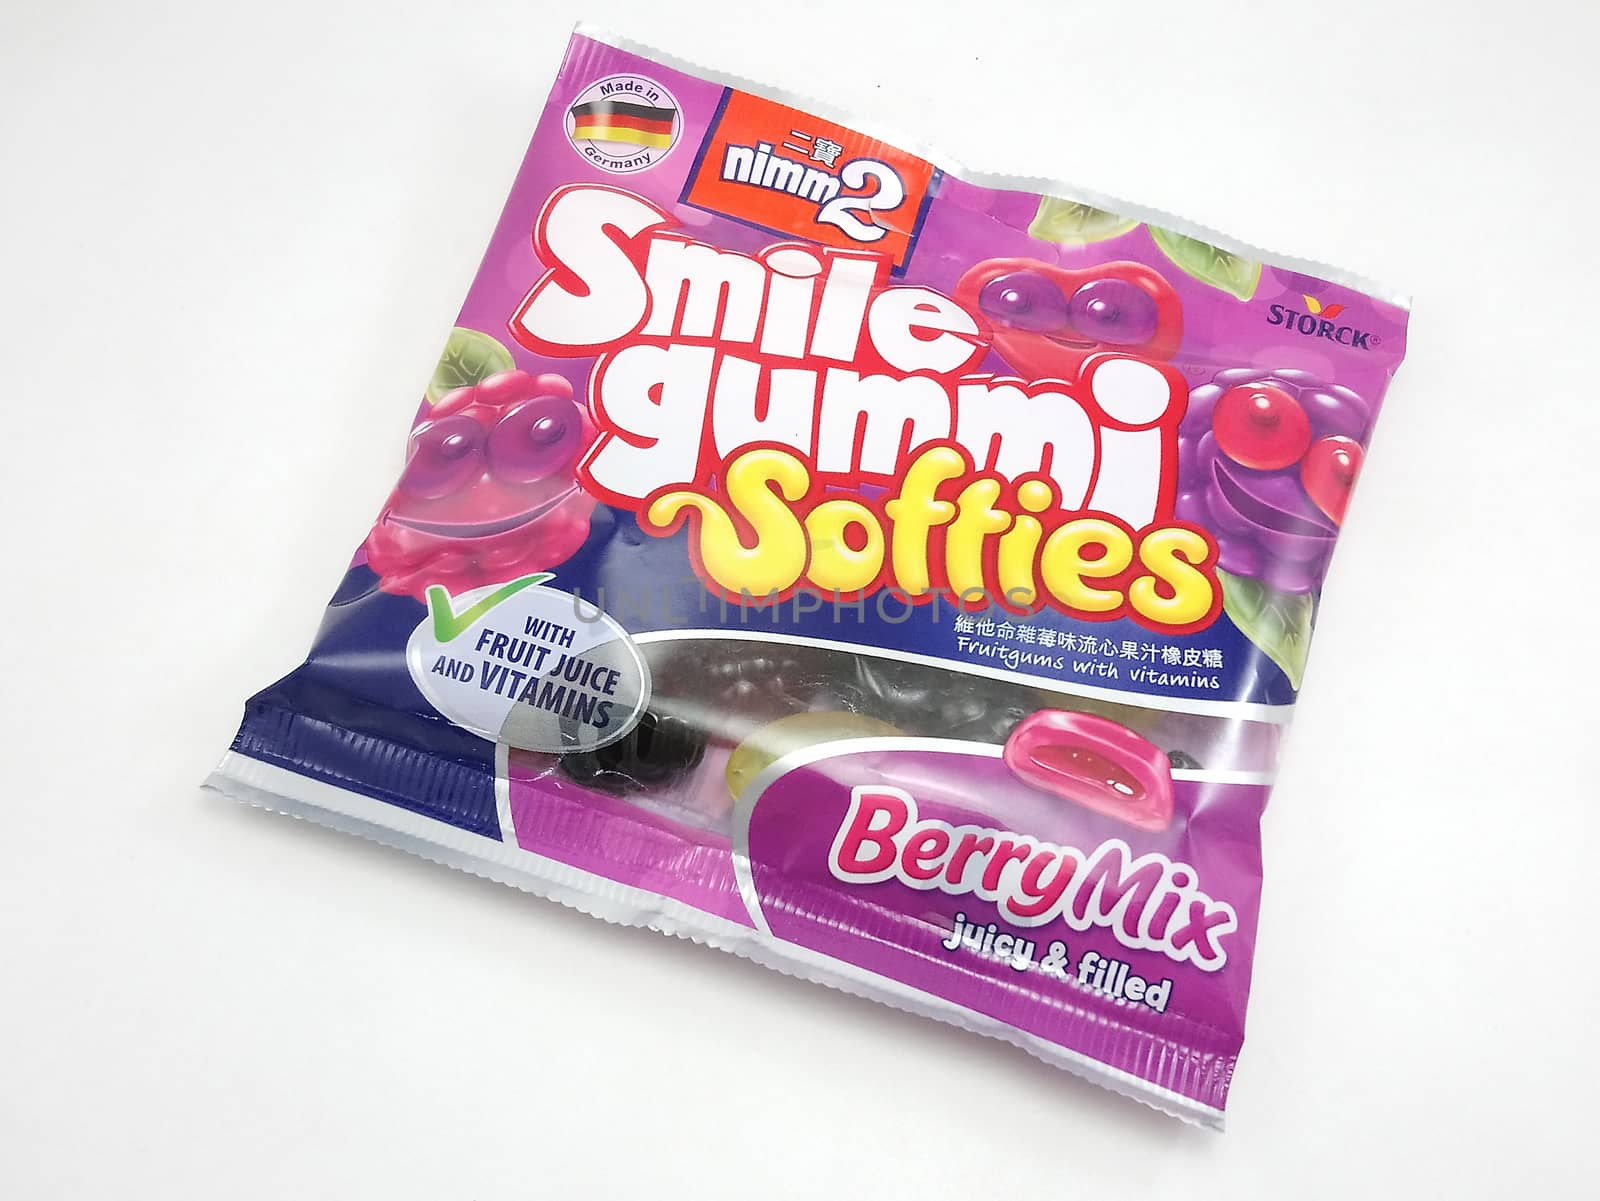 Smile gummi softies berry mix in Manila, Philippines by imwaltersy